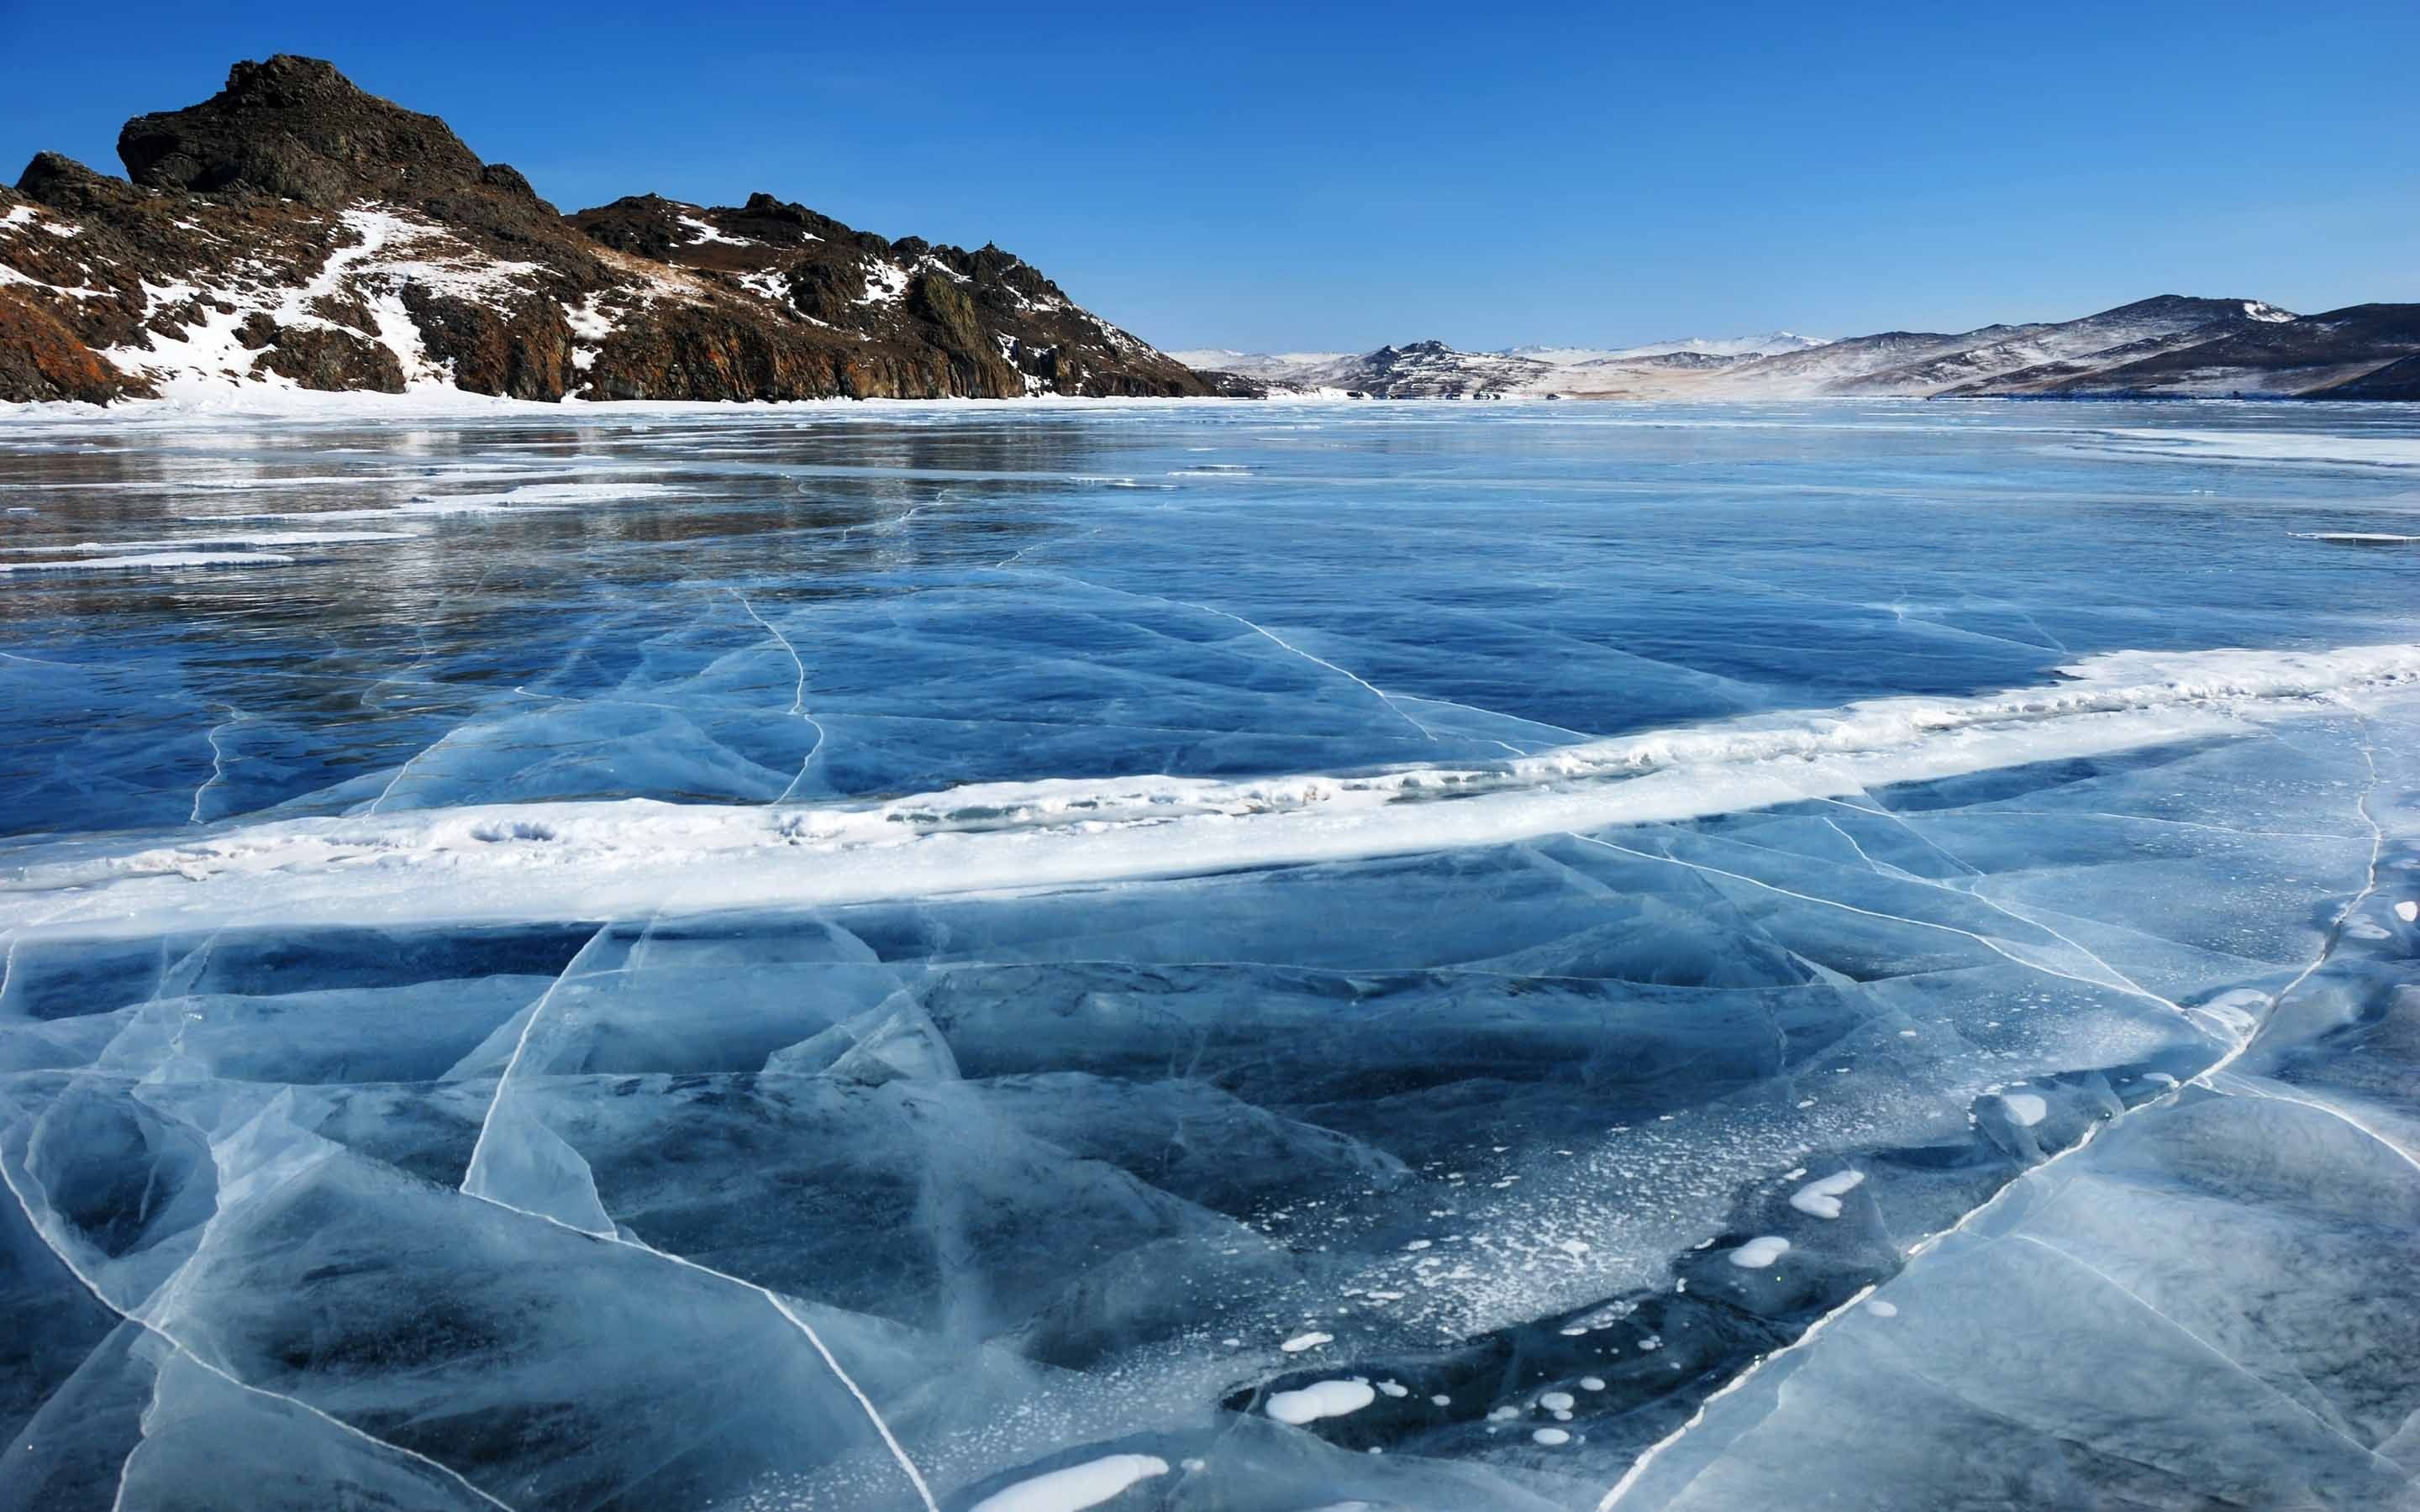 Baikal Lake Frozen Winter MacBook Air Wallpaper Download